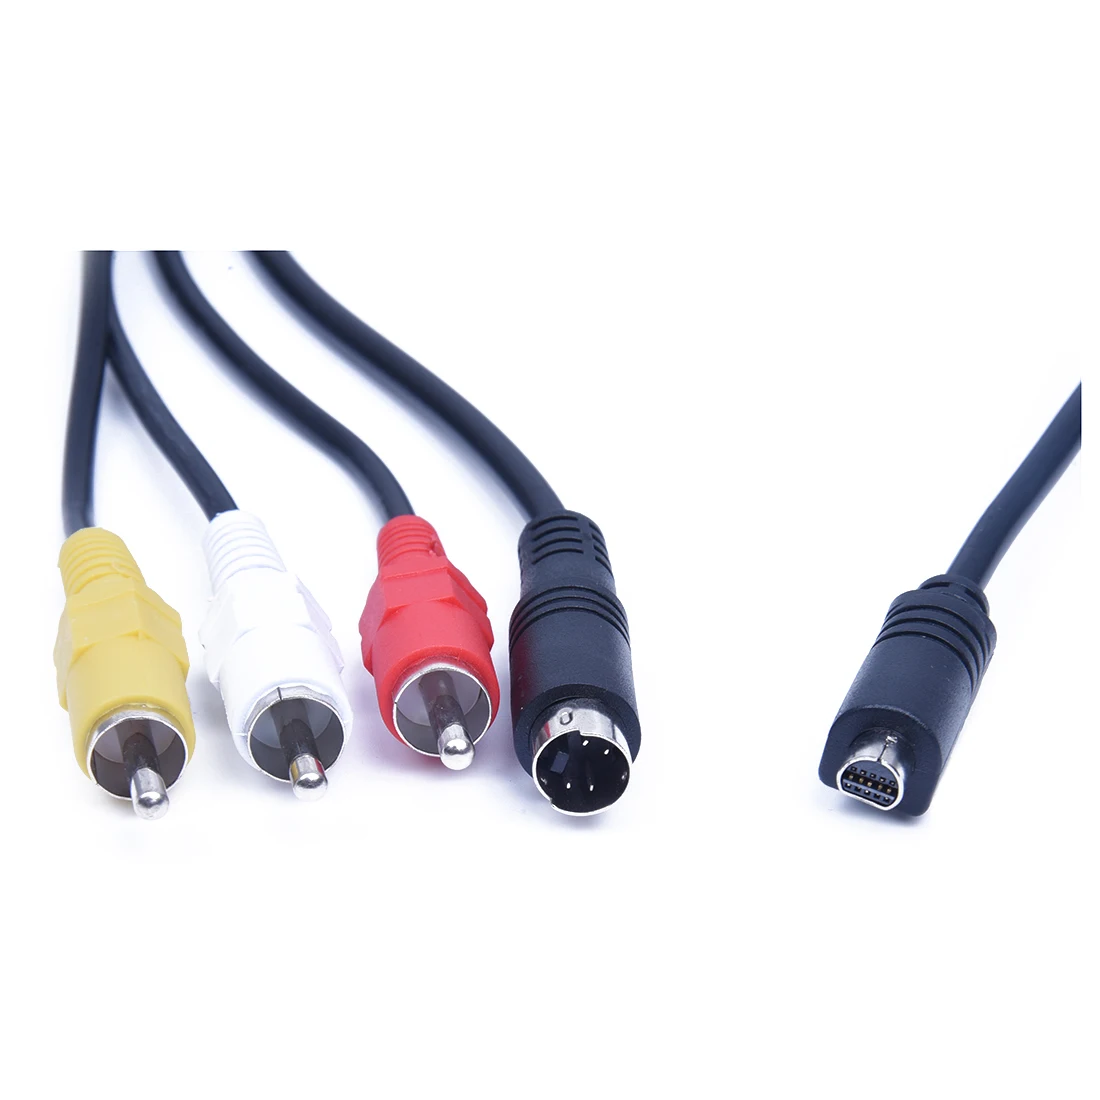 VMC-15FS кабель для Micro мВ Mini DV видеокамеры | Электроника